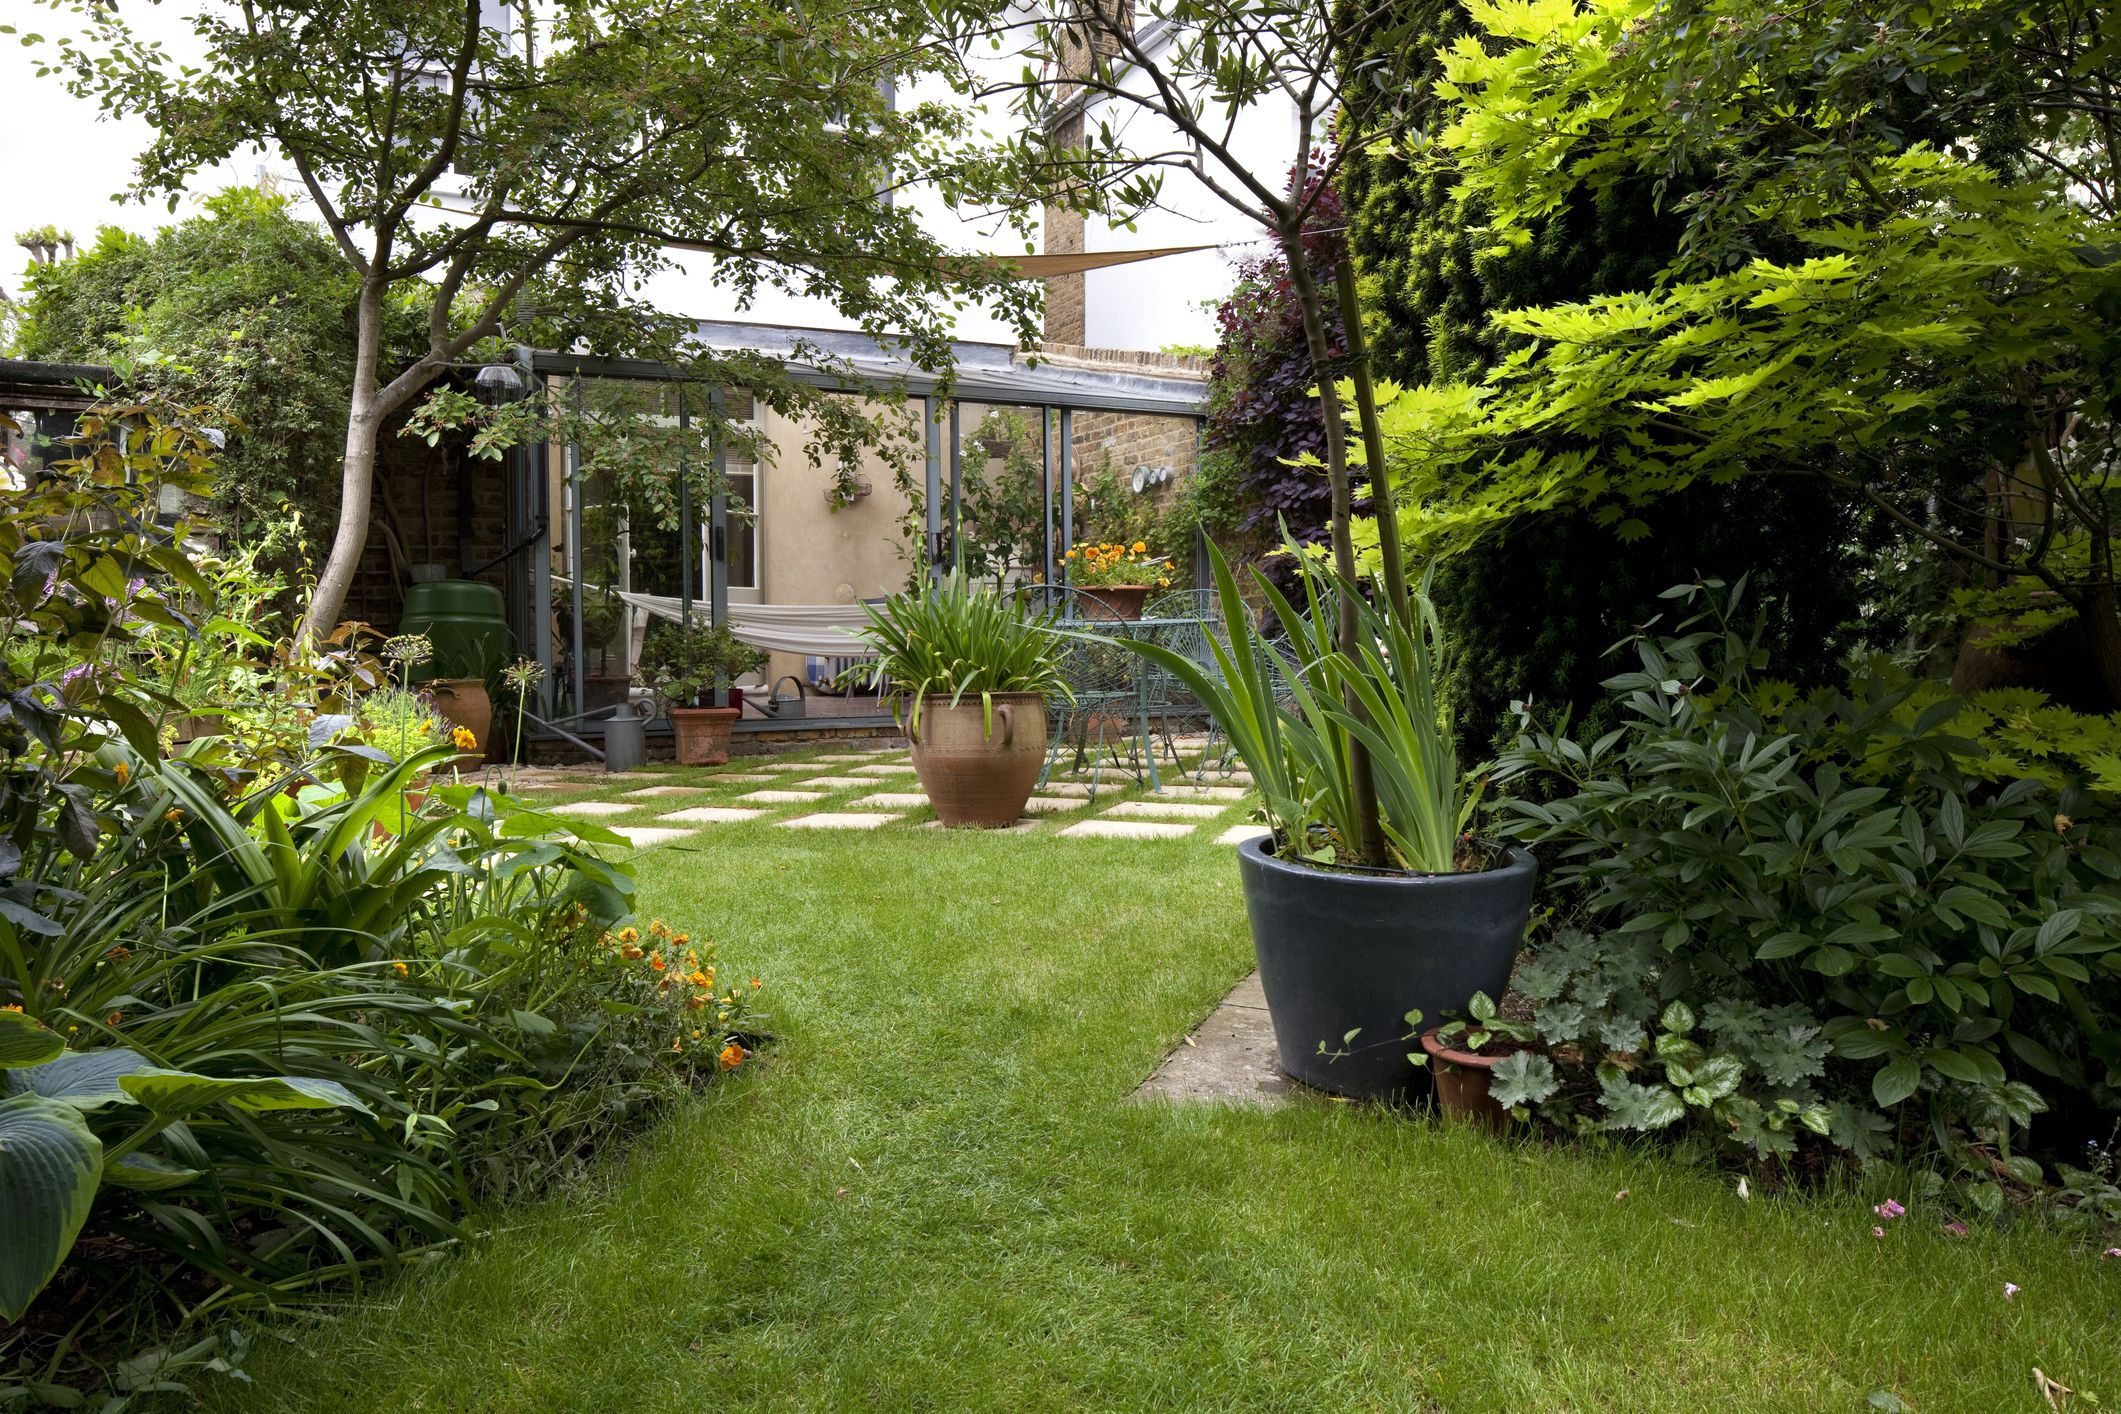 Garden design ideas suburban garden and lawn, Kingston upon Thames, England, UK XPKKCYP